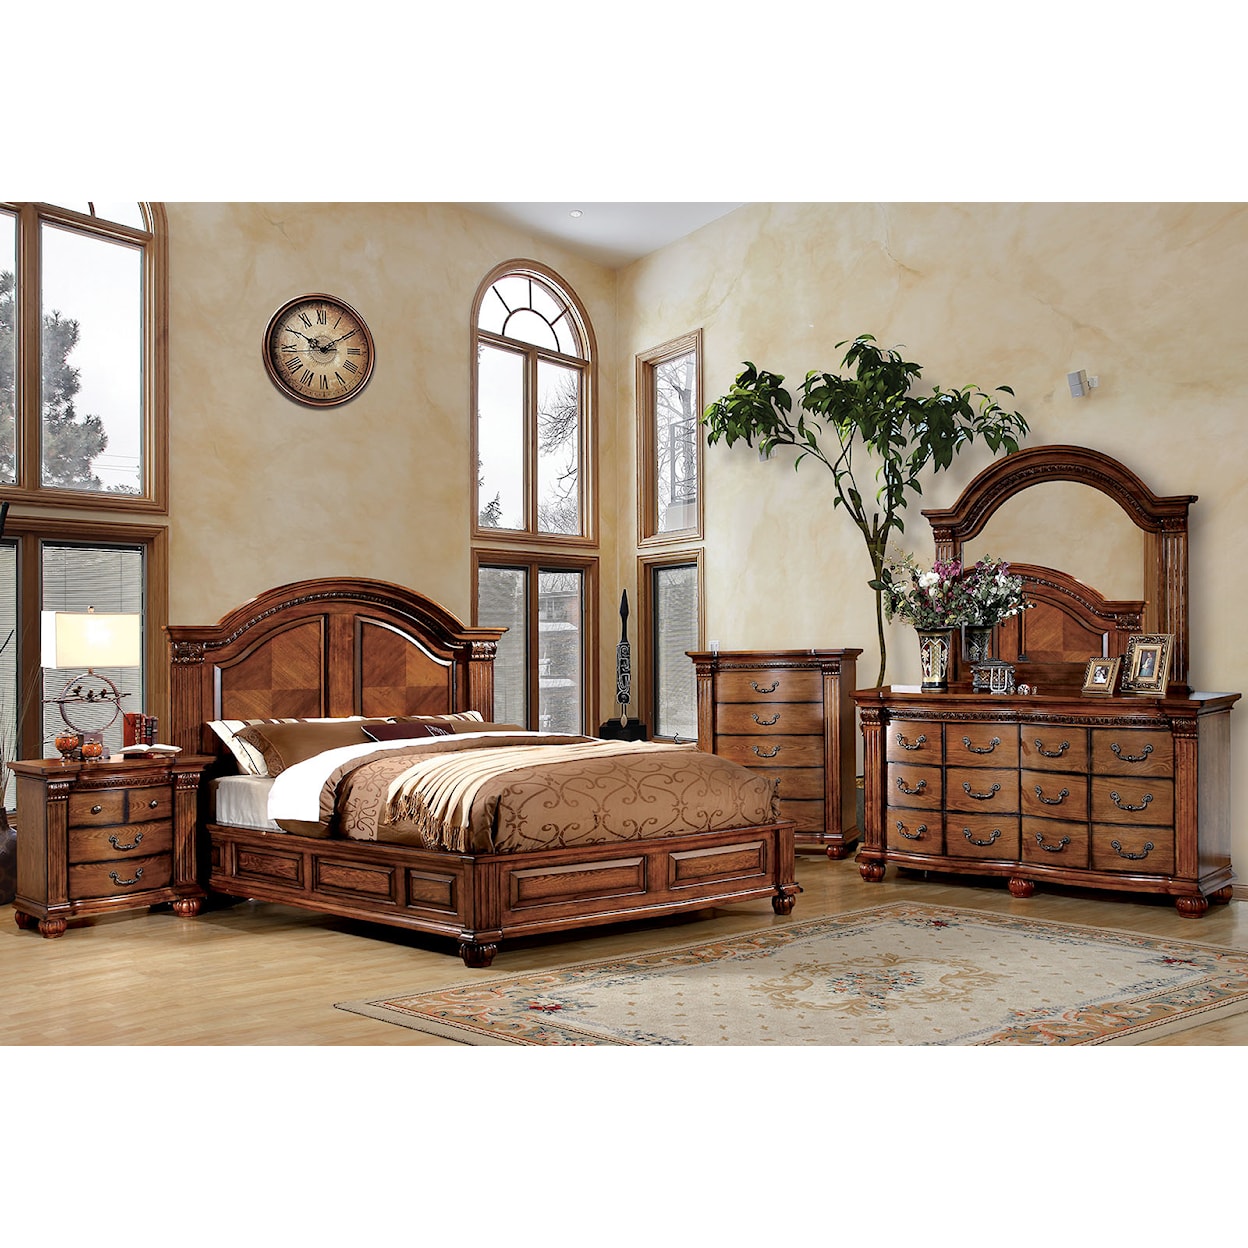 Furniture of America Bellagrand King Bedroom Set